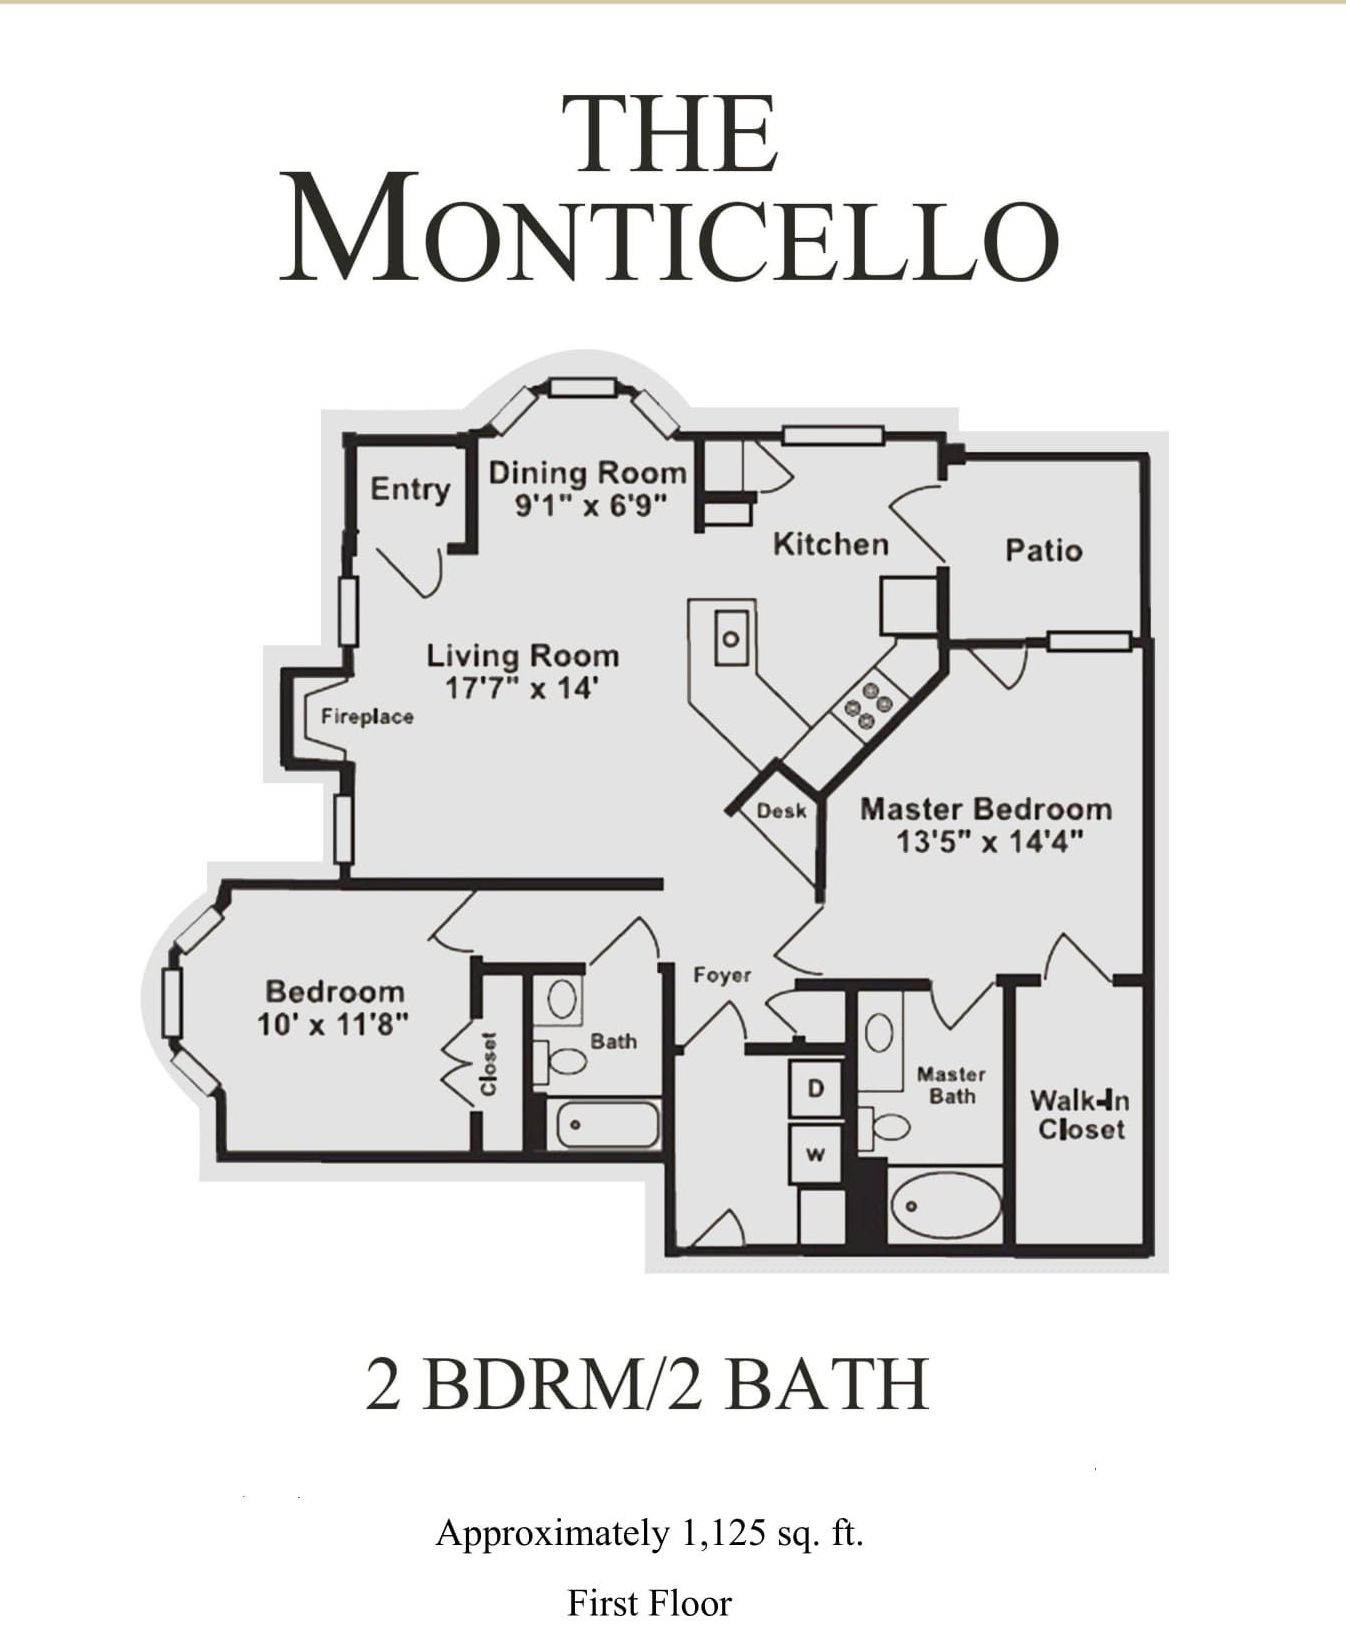 Monticello floor plan drawing